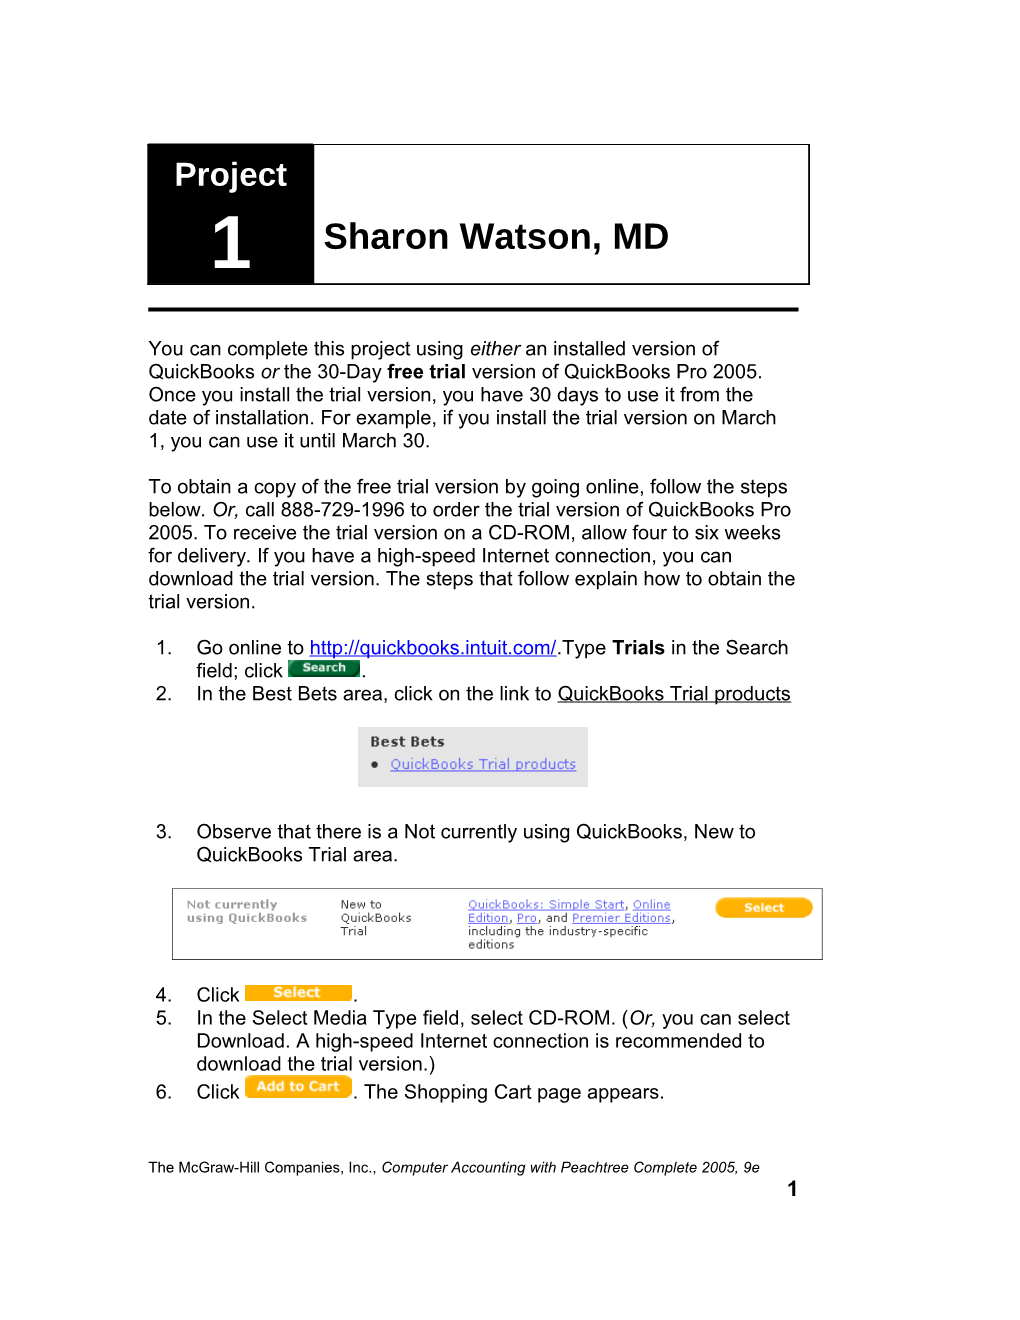 Project 1: Sharon Watson, MD 21